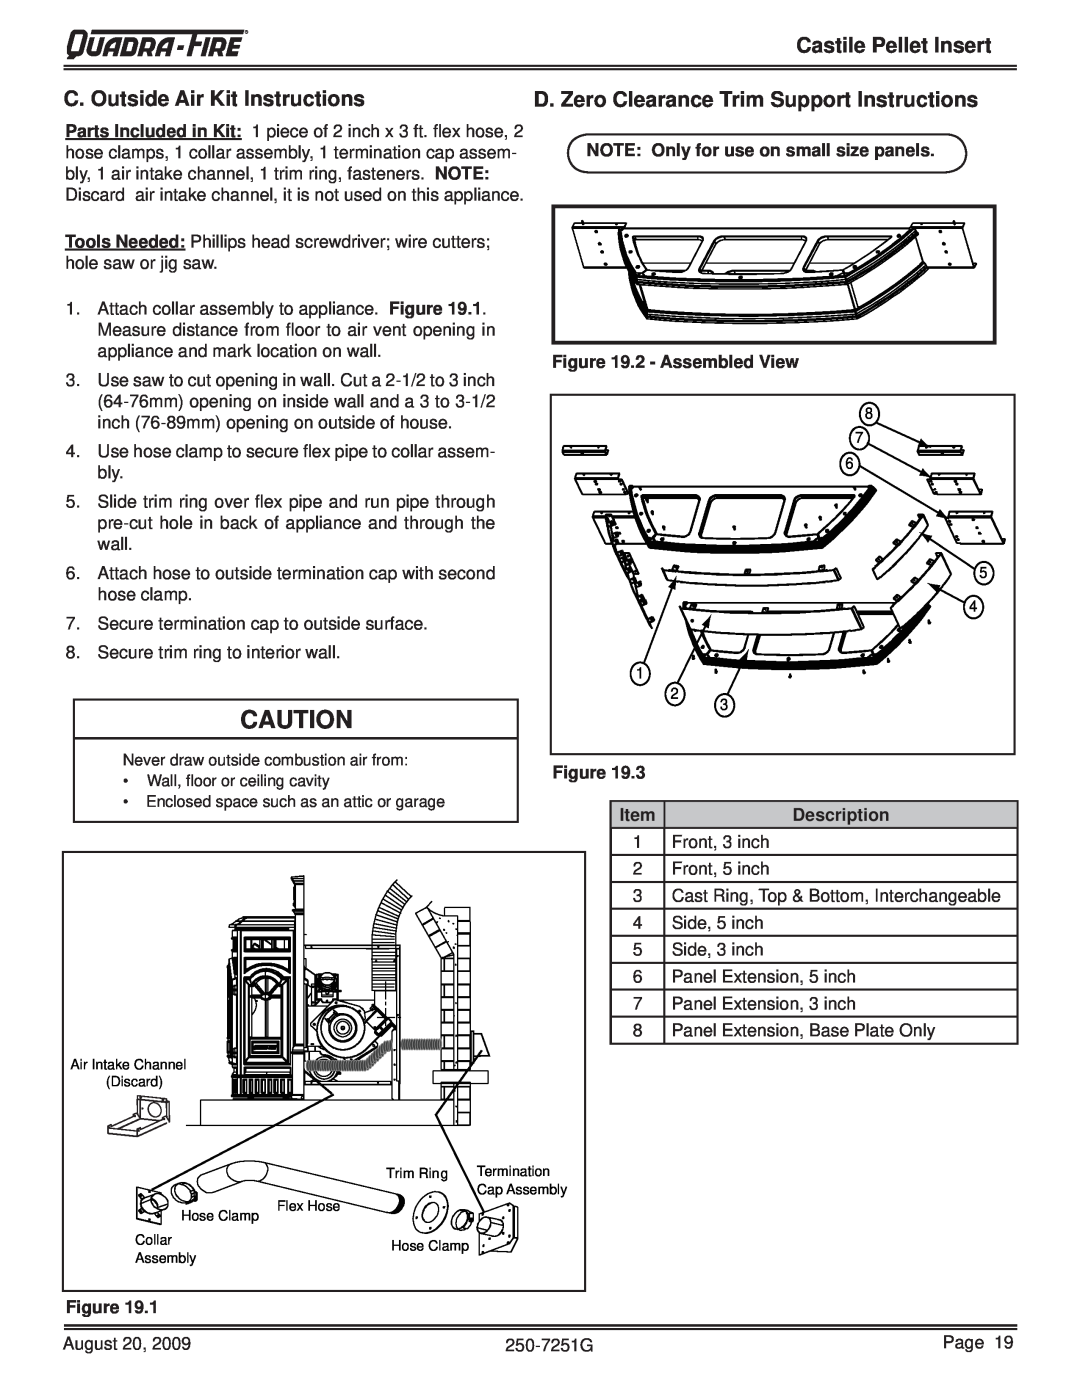 Quadra-Fire CASTINS-CWL C. Outside Air Kit Instructions, D. Zero Clearance Trim Support Instructions, 2 - Assembled View 